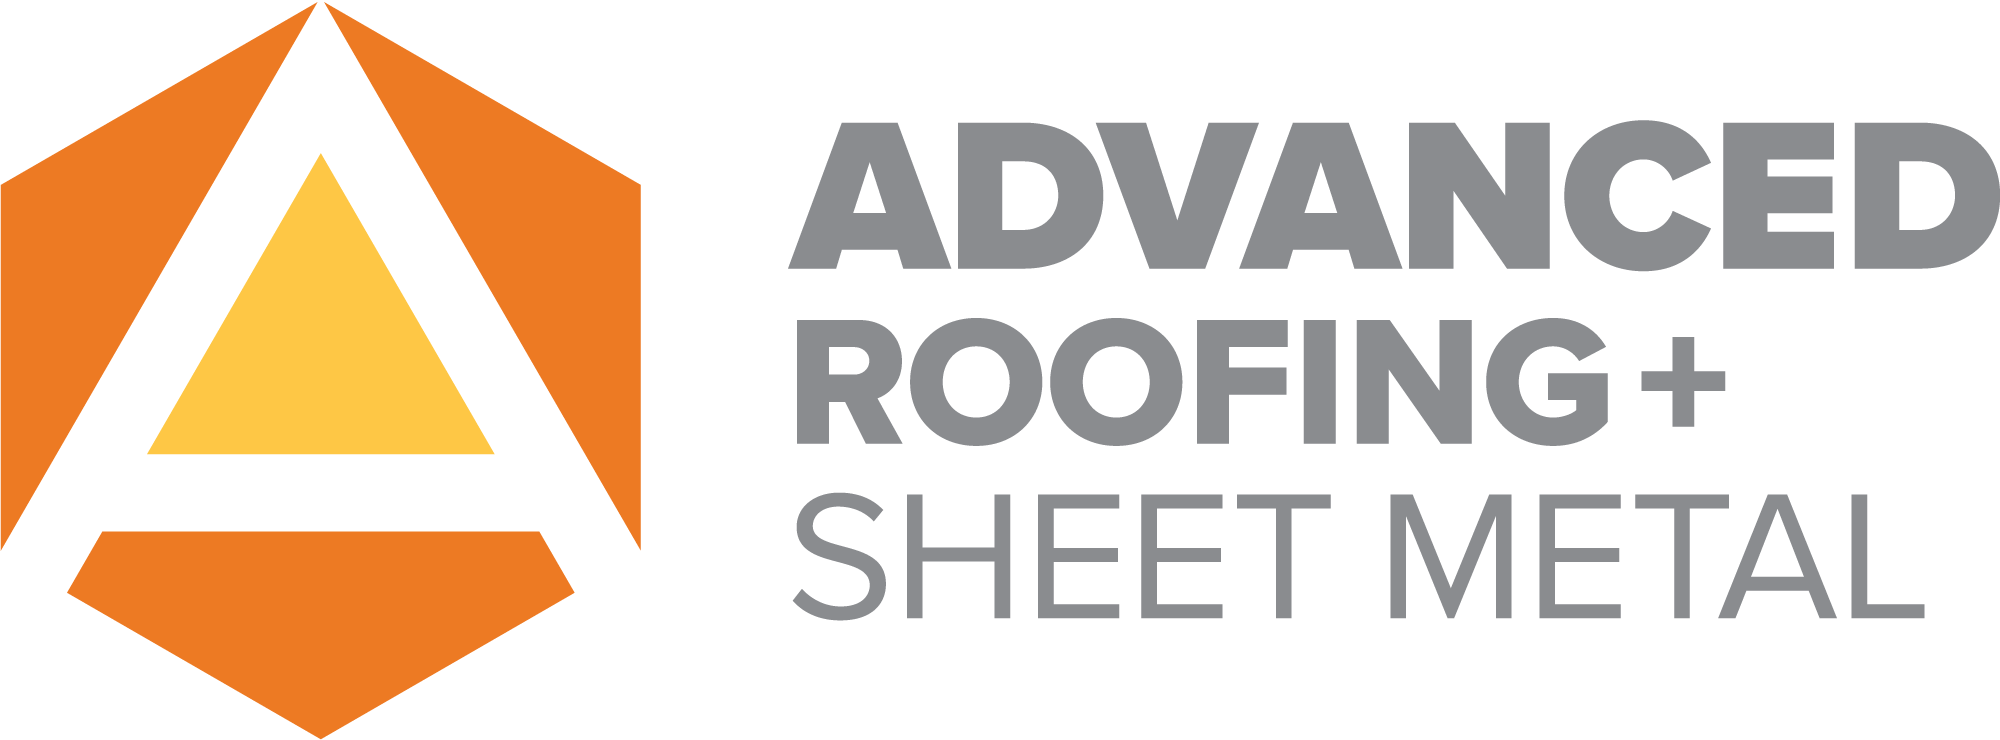 Advanced Roofing and Sheetmetal Colorado